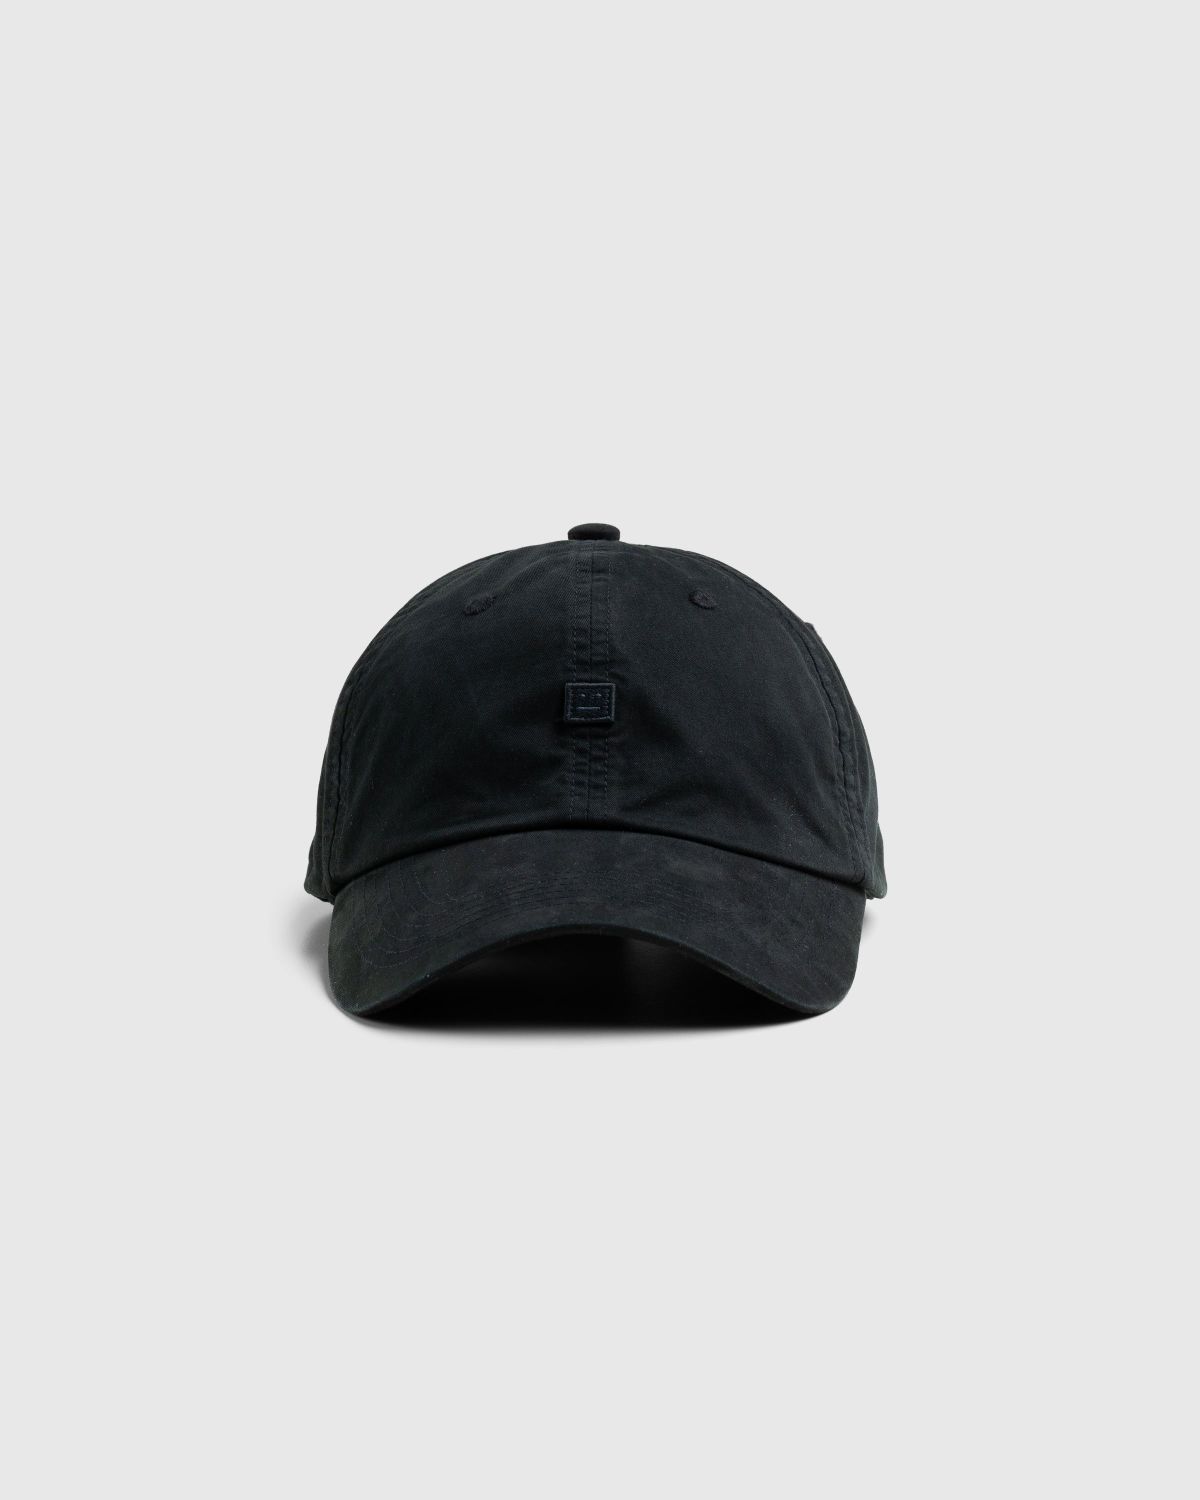 Acne Studios – Face Patch Baseball Cap Black - Hats - Black - Image 2